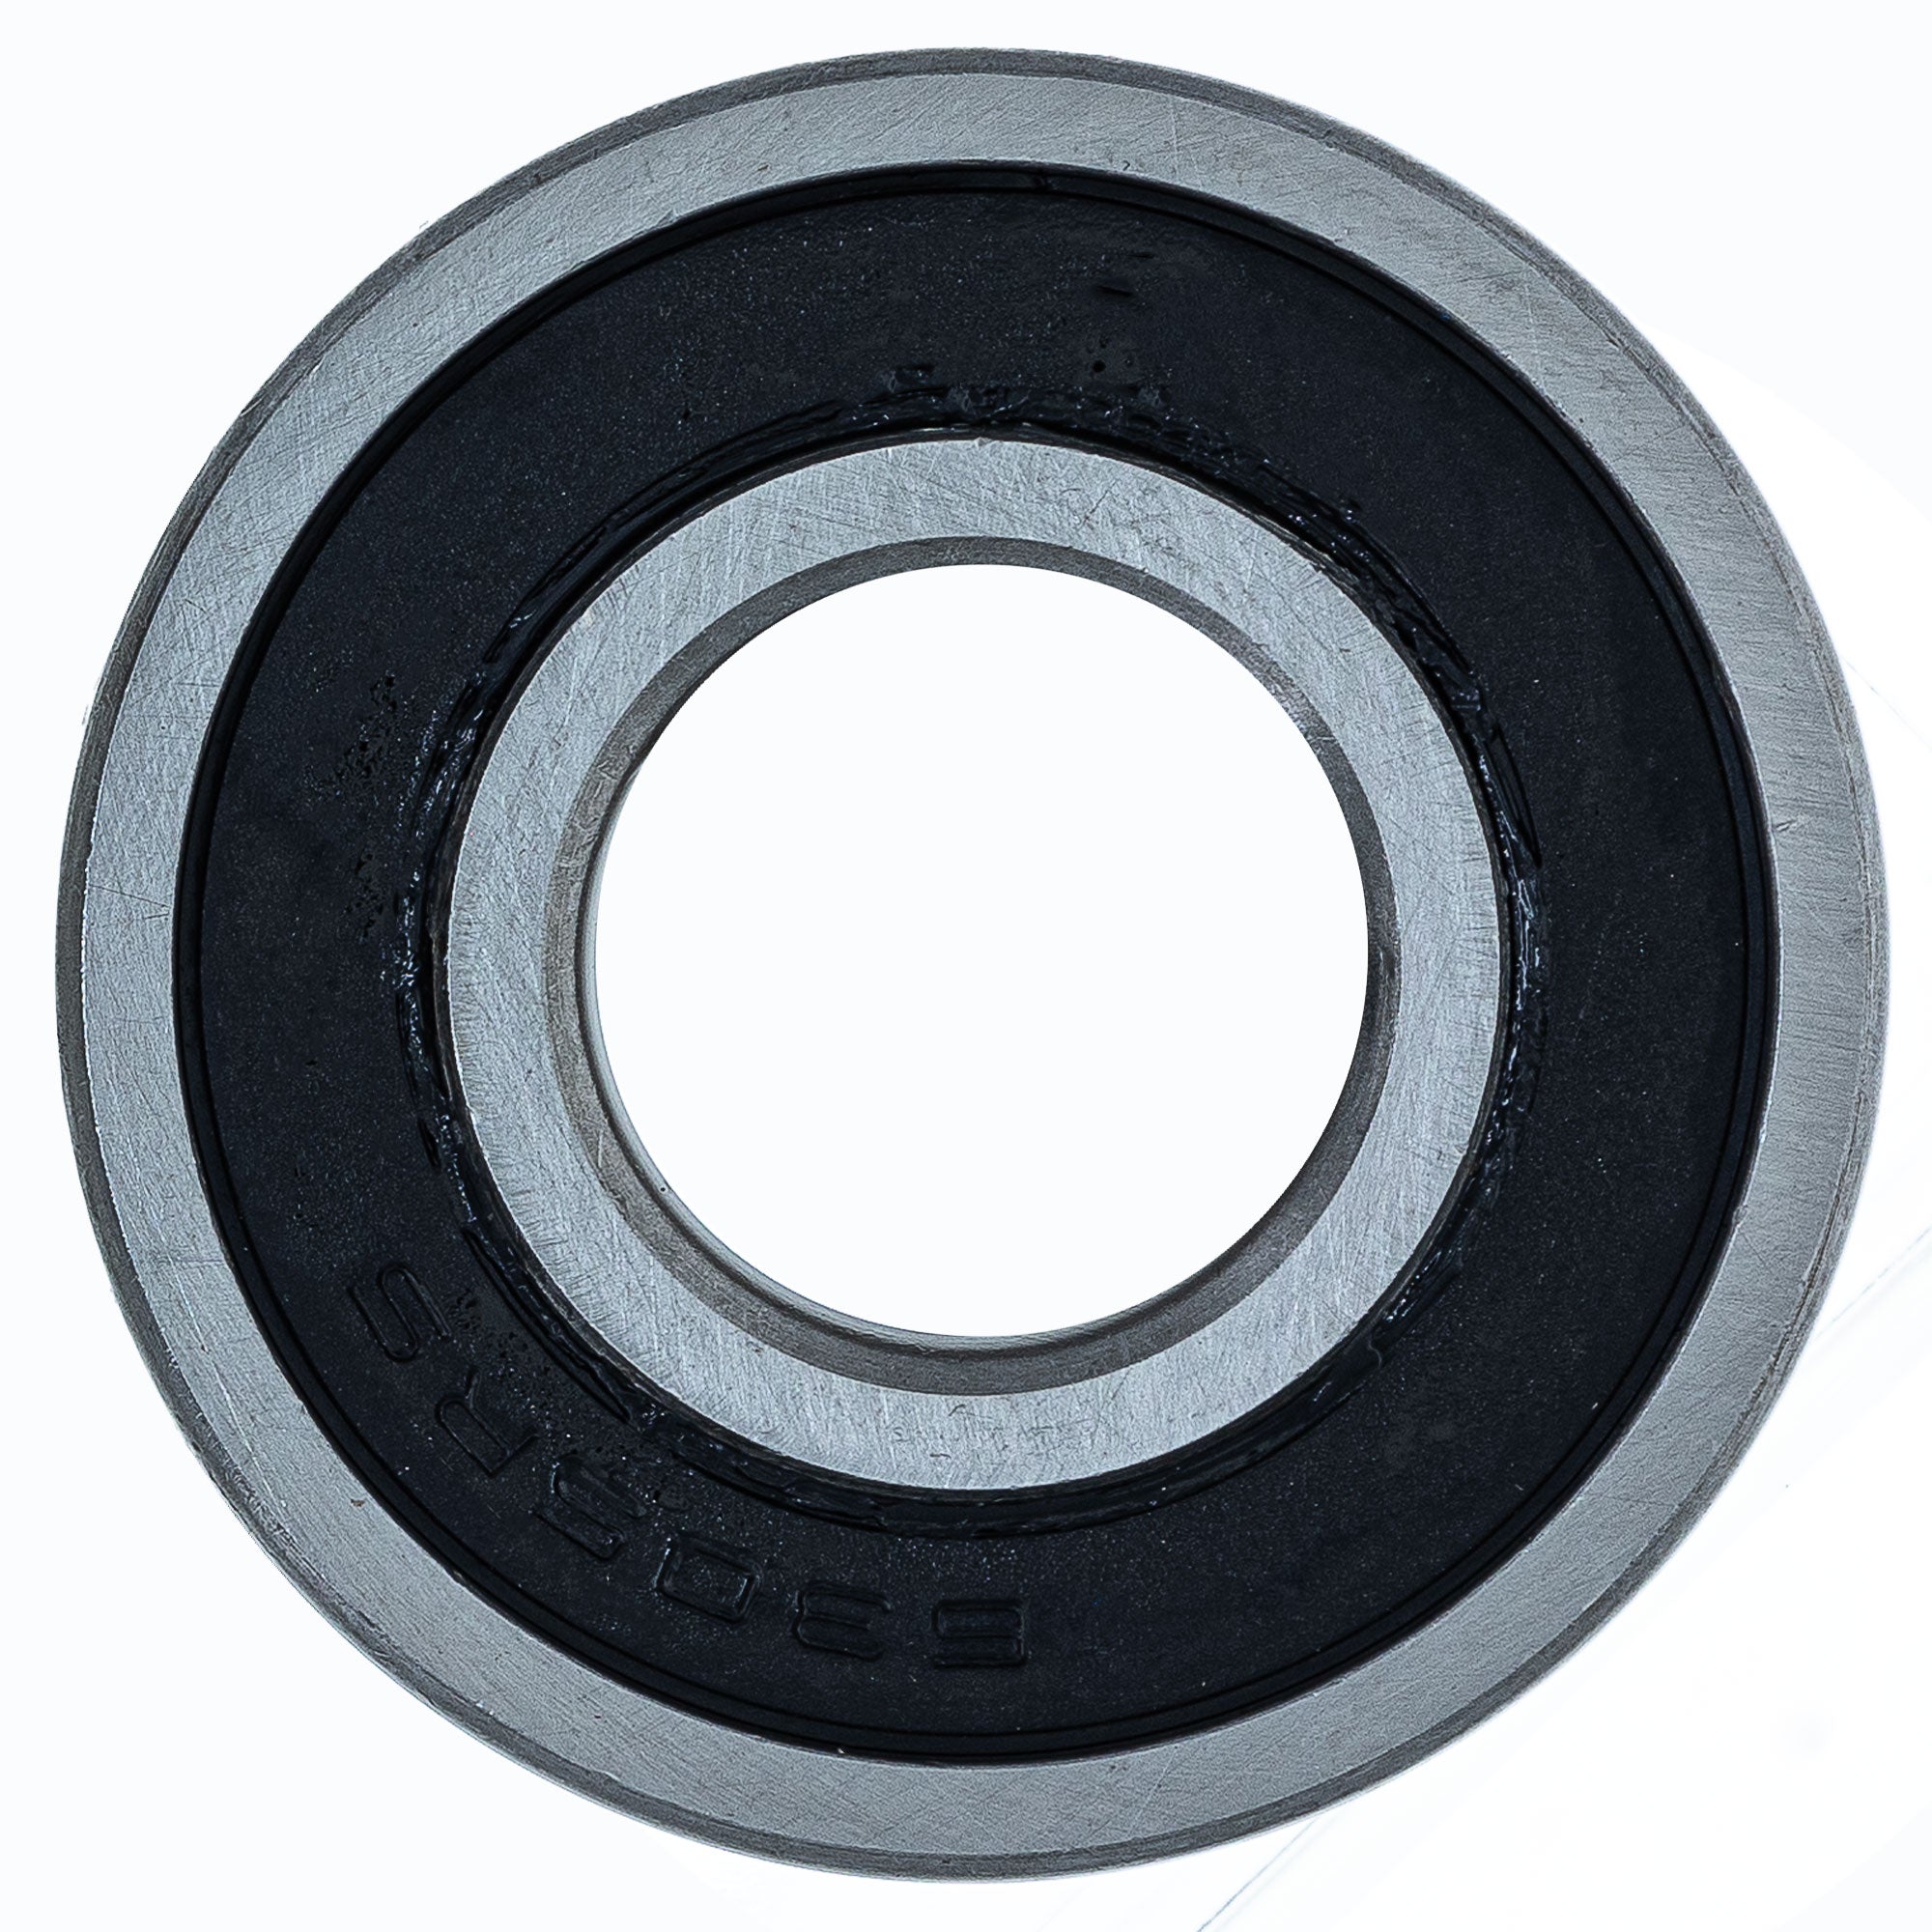 Wheel Bearing for Suzuki Quadrunner 250 09262-25073 25x62x17mm 2 Pack